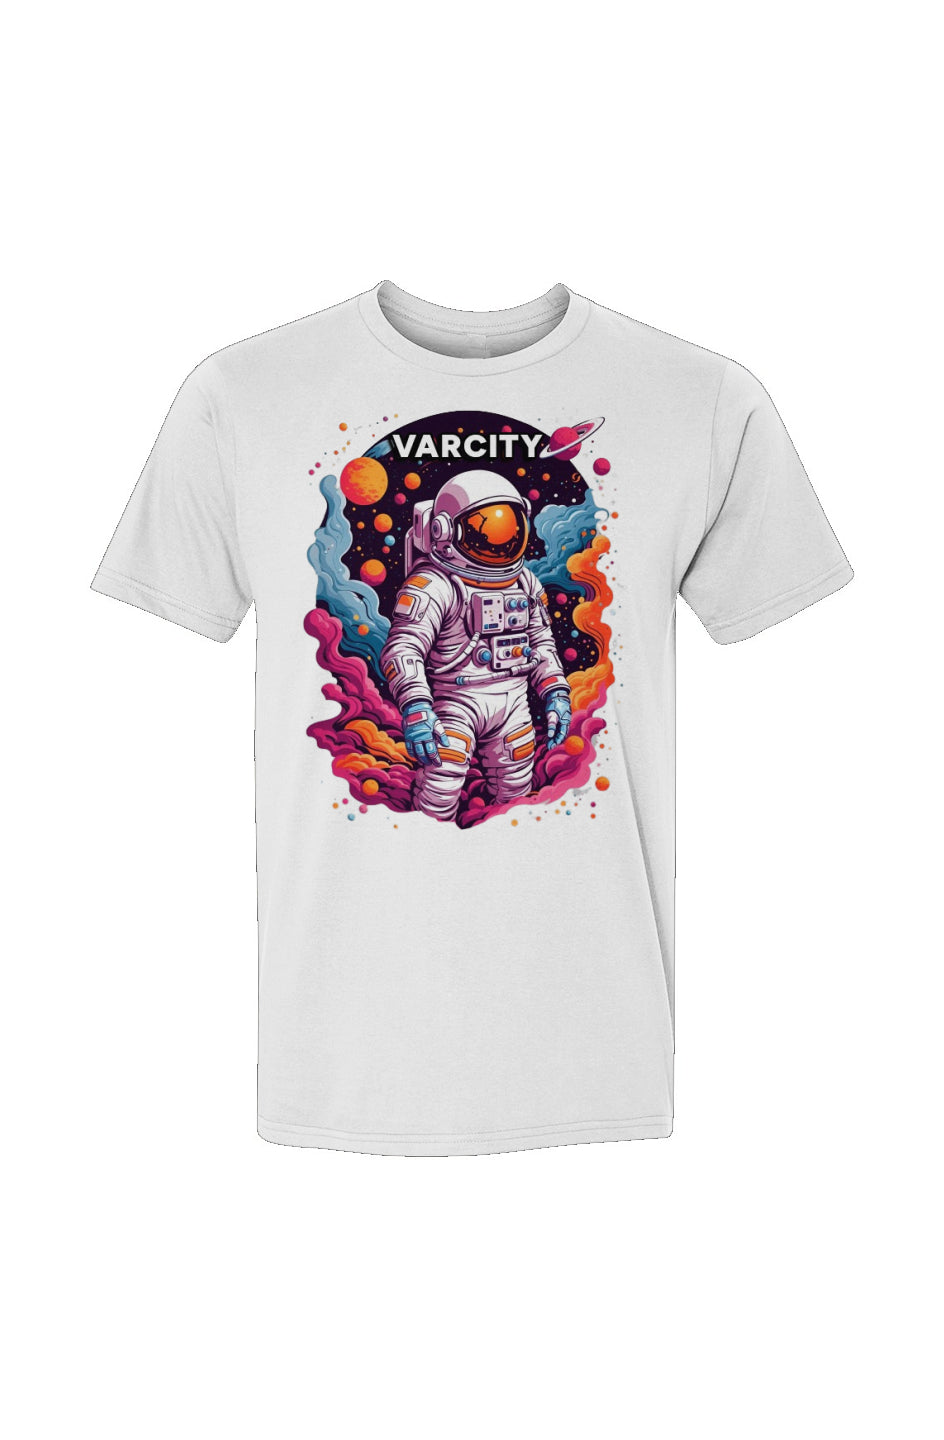 Varcity Wrld ® Astronaut Tee White